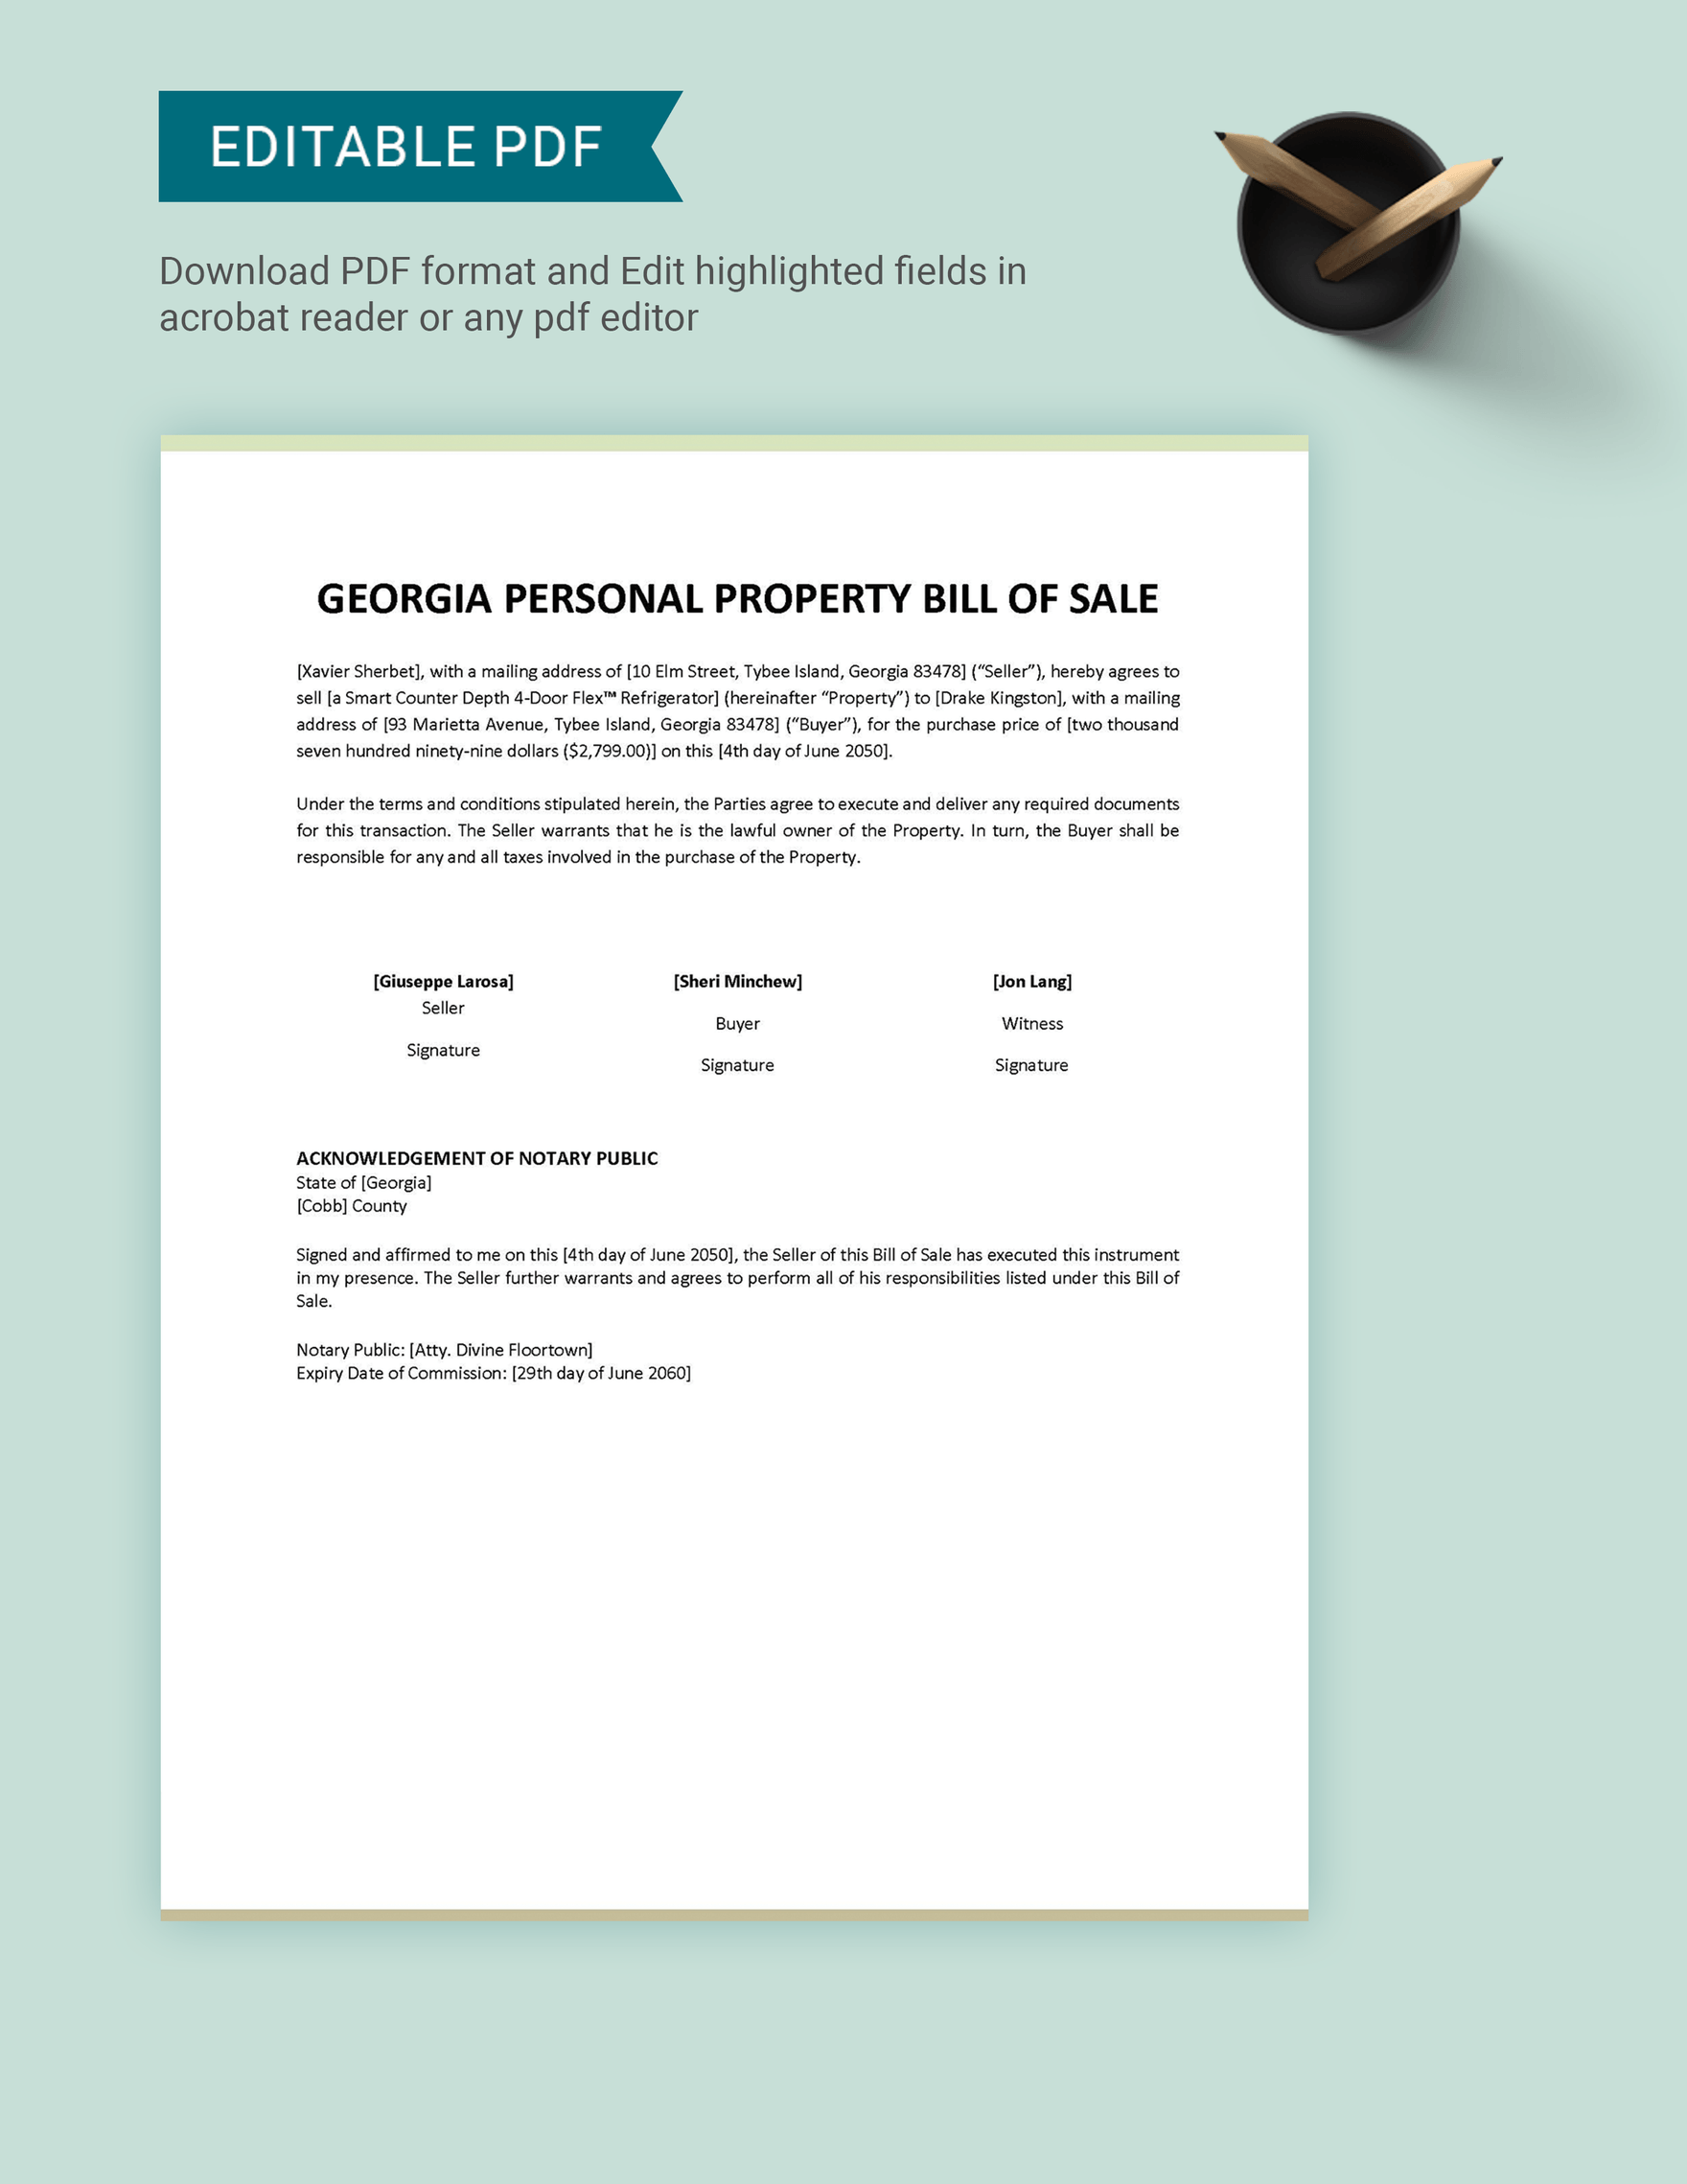 Georgia Personal Property Bill of Sale Template